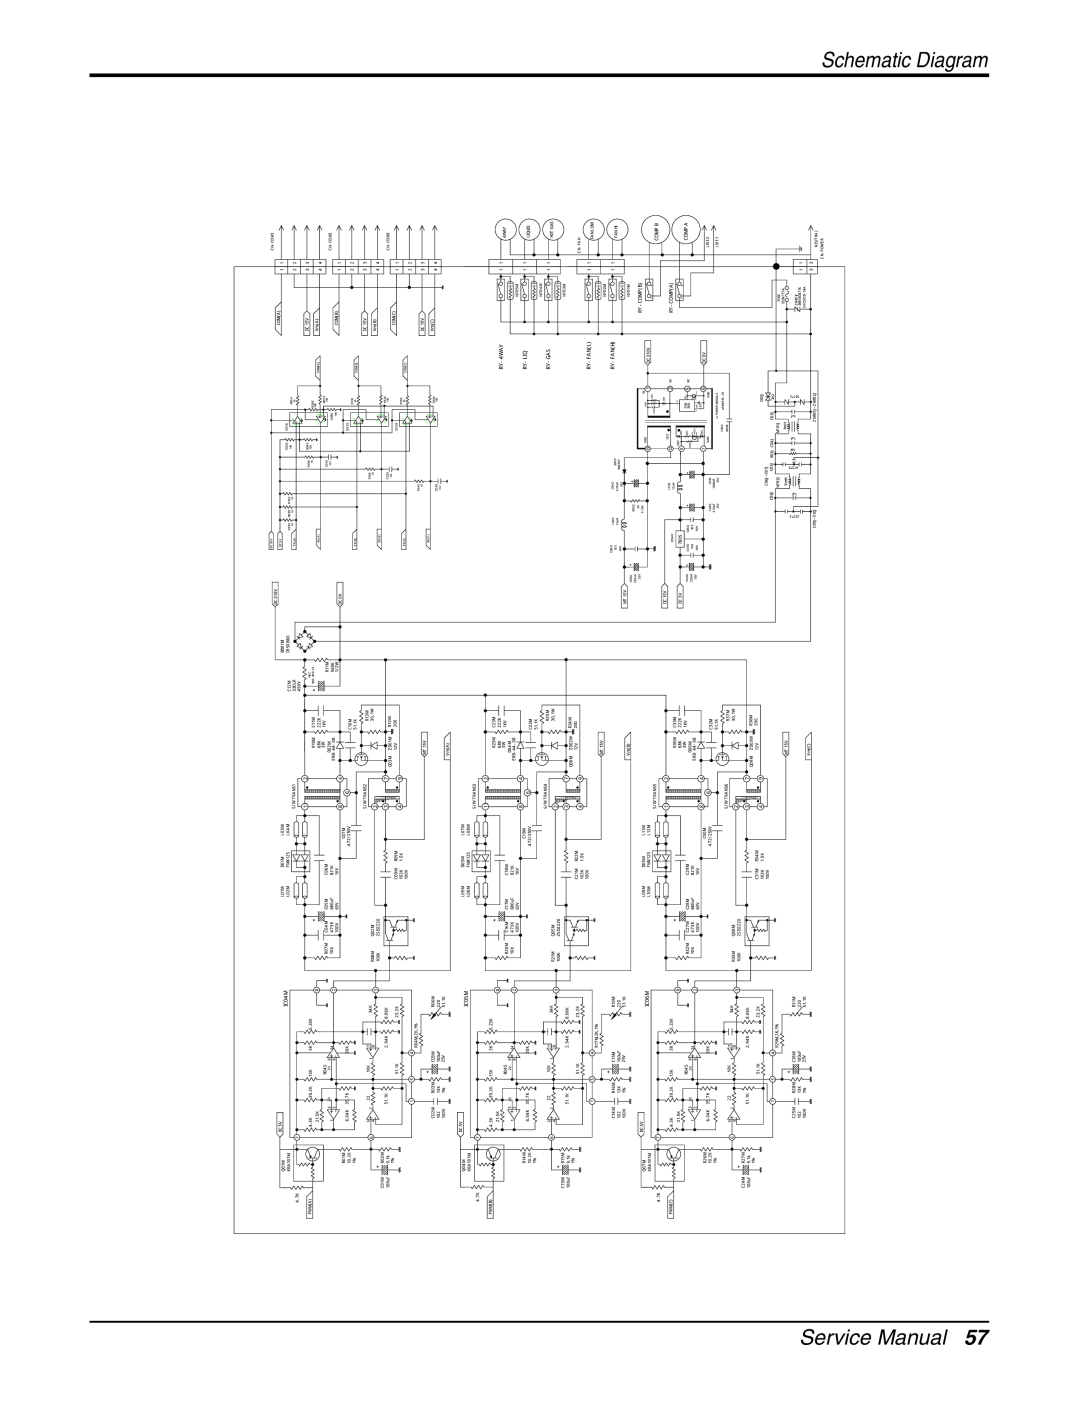 LG Electronics A2UC243FA0 (LMU240CE), AMNH123APM0(LMAN120HNS), A2UH243FA0(LMU240HE) Service Manual, Schematic Diagram, R102 